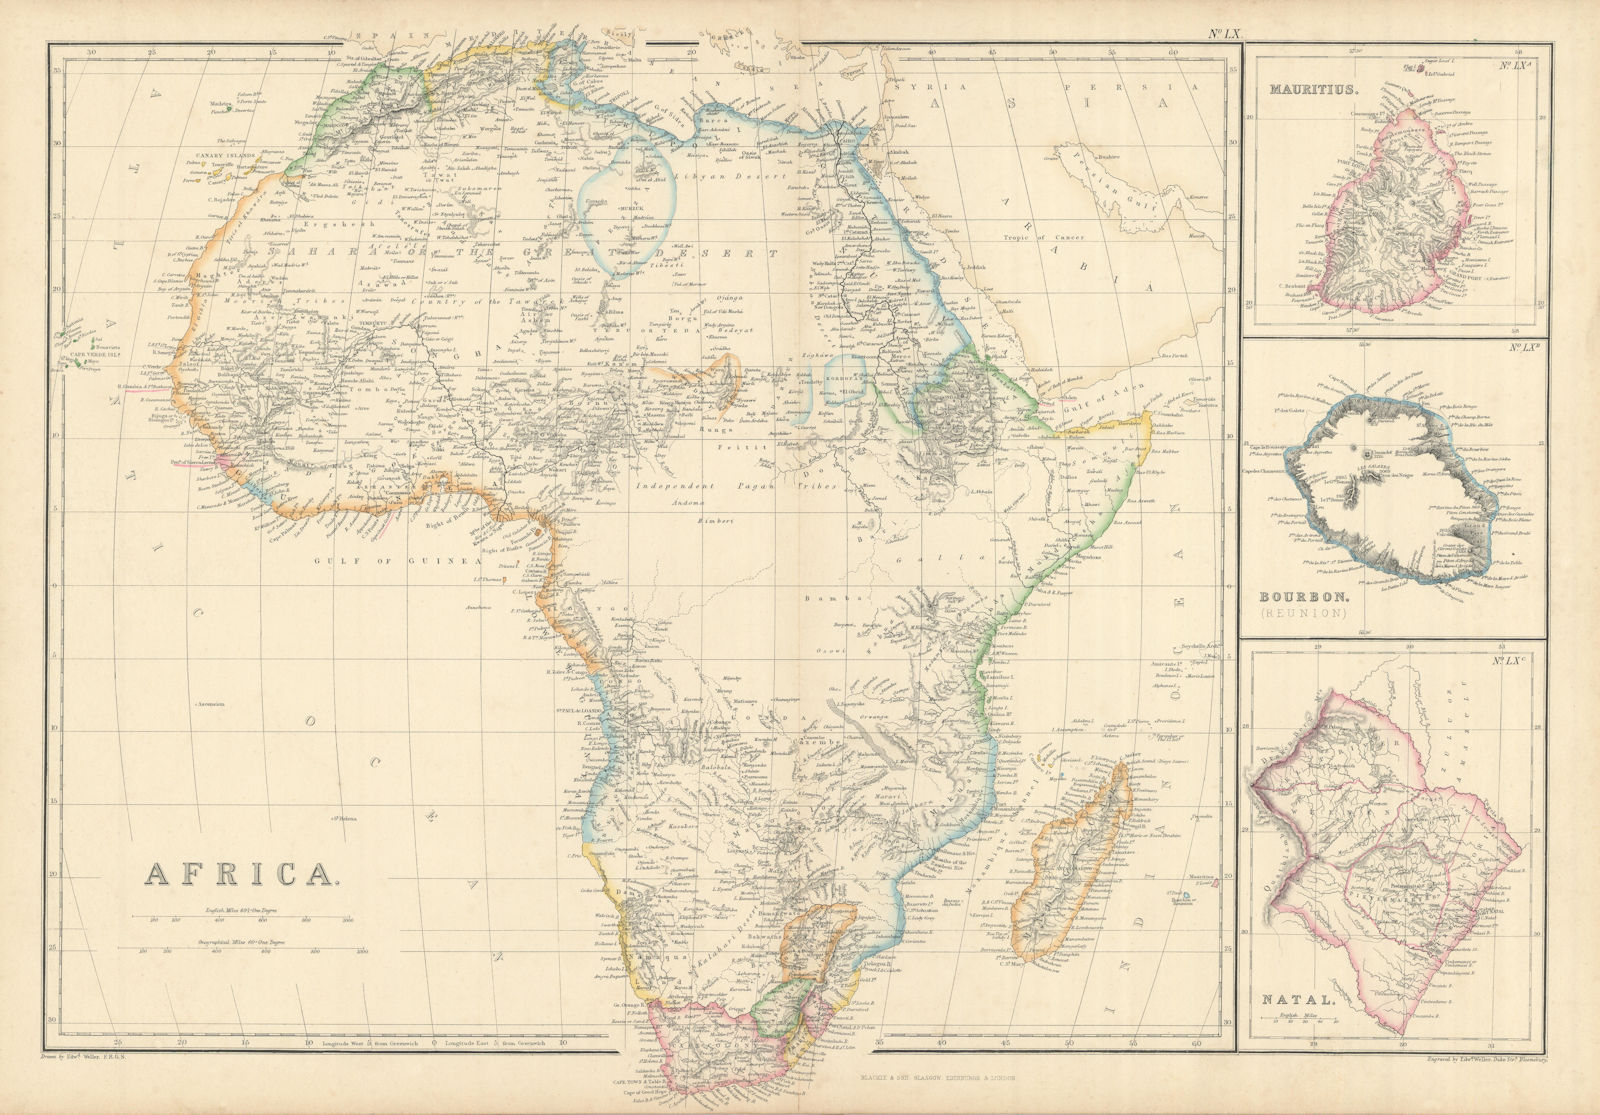 Africa. Mauritius, Bourbon (Reunion) & Natal by Edward Weller 1860 old map